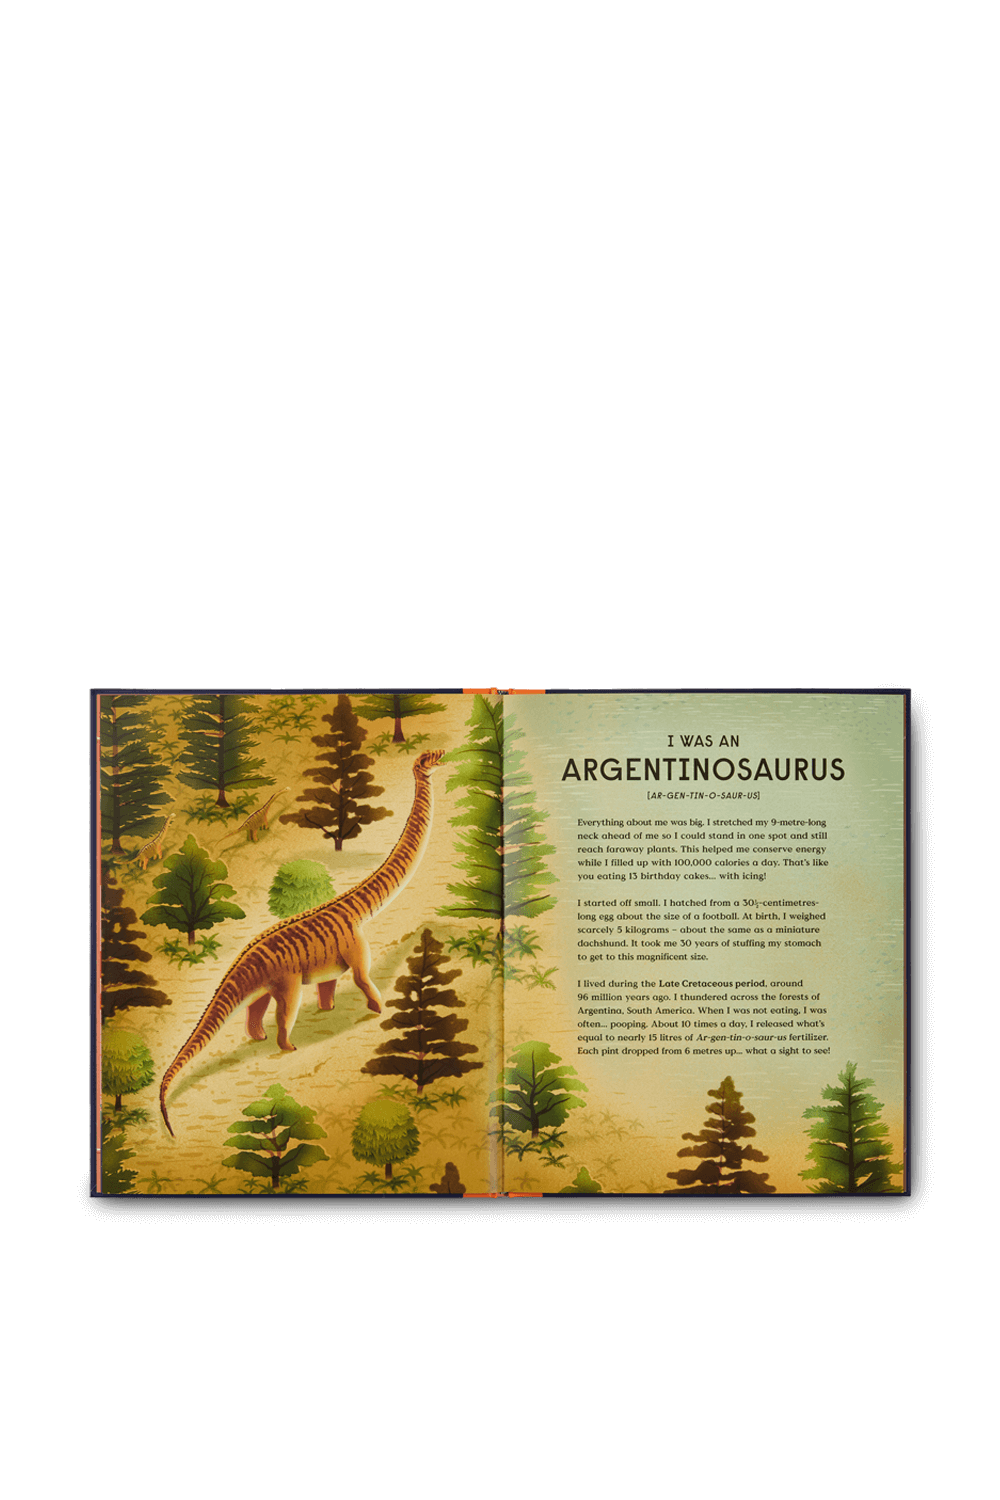 Book of Dinosaurs PHAIDON